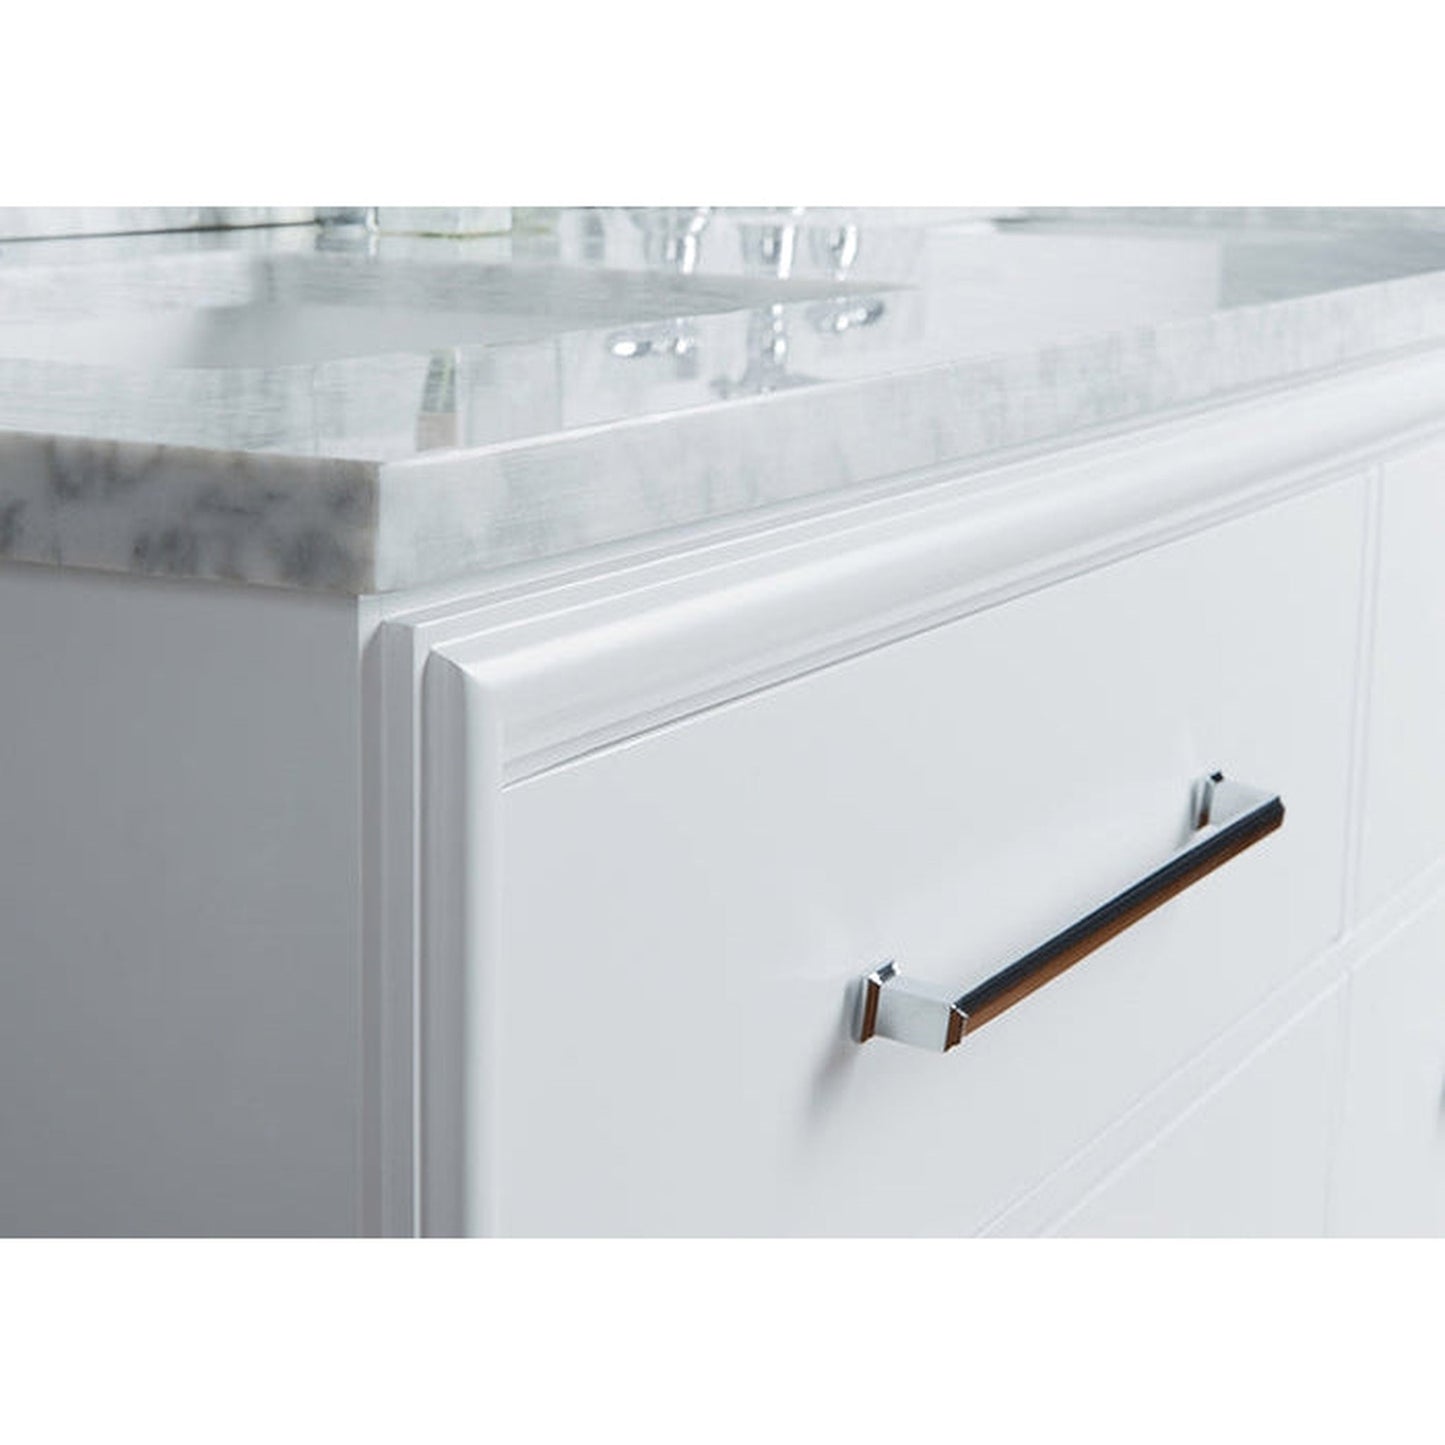 Ancerre Designs Ellie 60" White 6-Drawer Bathroom Vanity With Italian Carrara White Marble Vanity Top, Double Rectangular Undermount Ceramic Sinks, 4" Solid Wood Backsplash and Polished Chrome Hardware